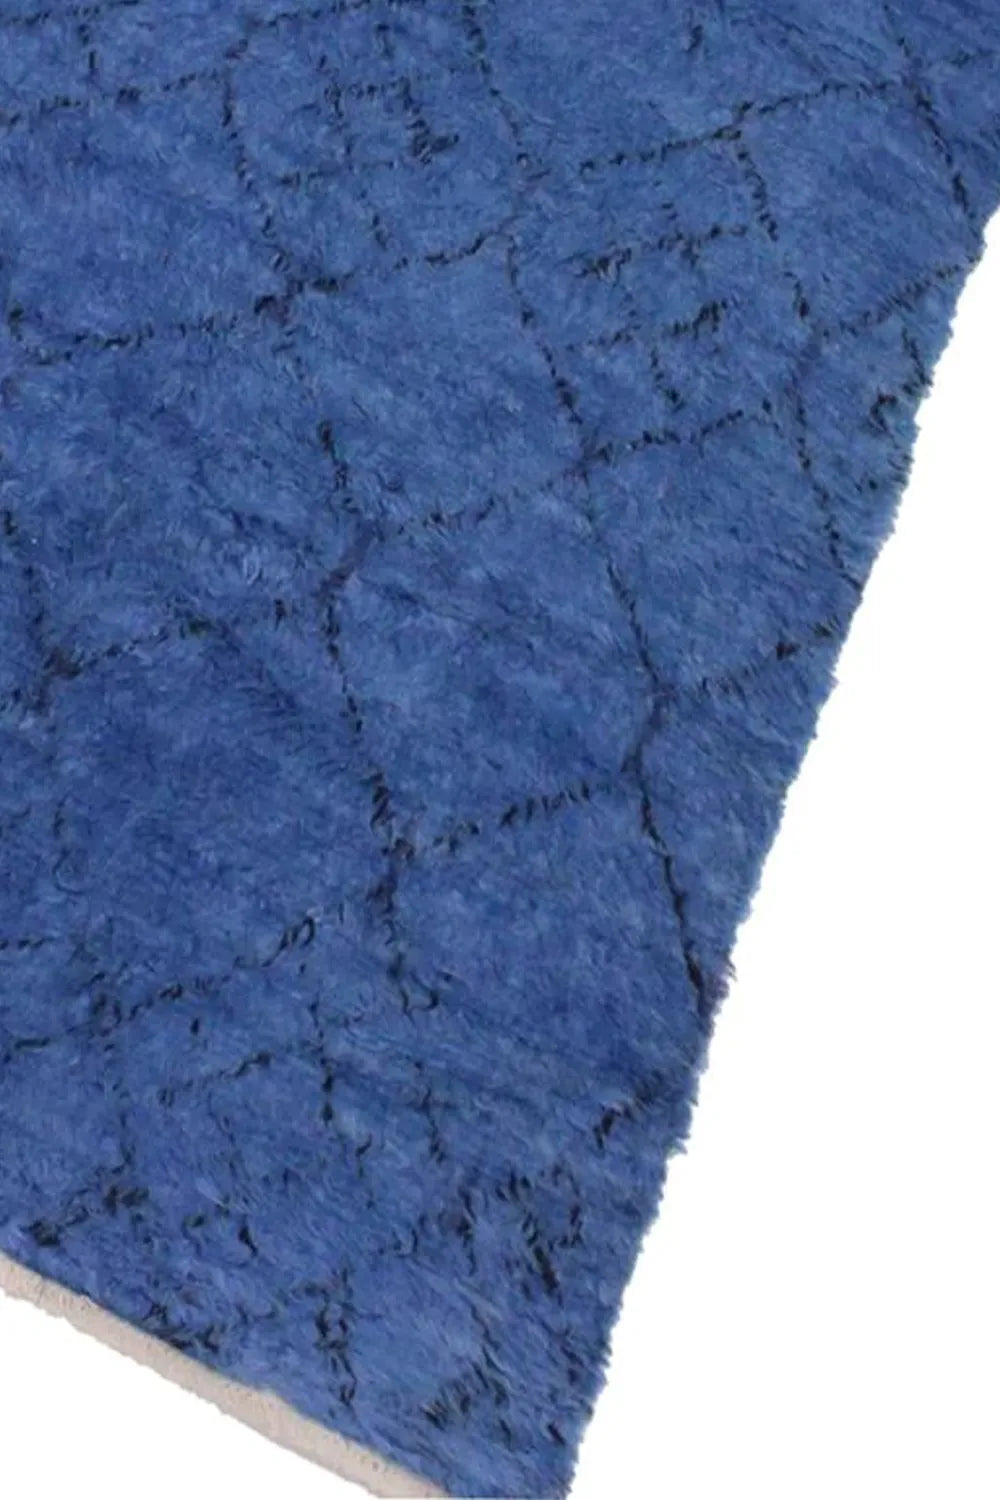 Handmade 9x12 Blue Shag Rug - Plush Wool for Contemporary Living Rooms